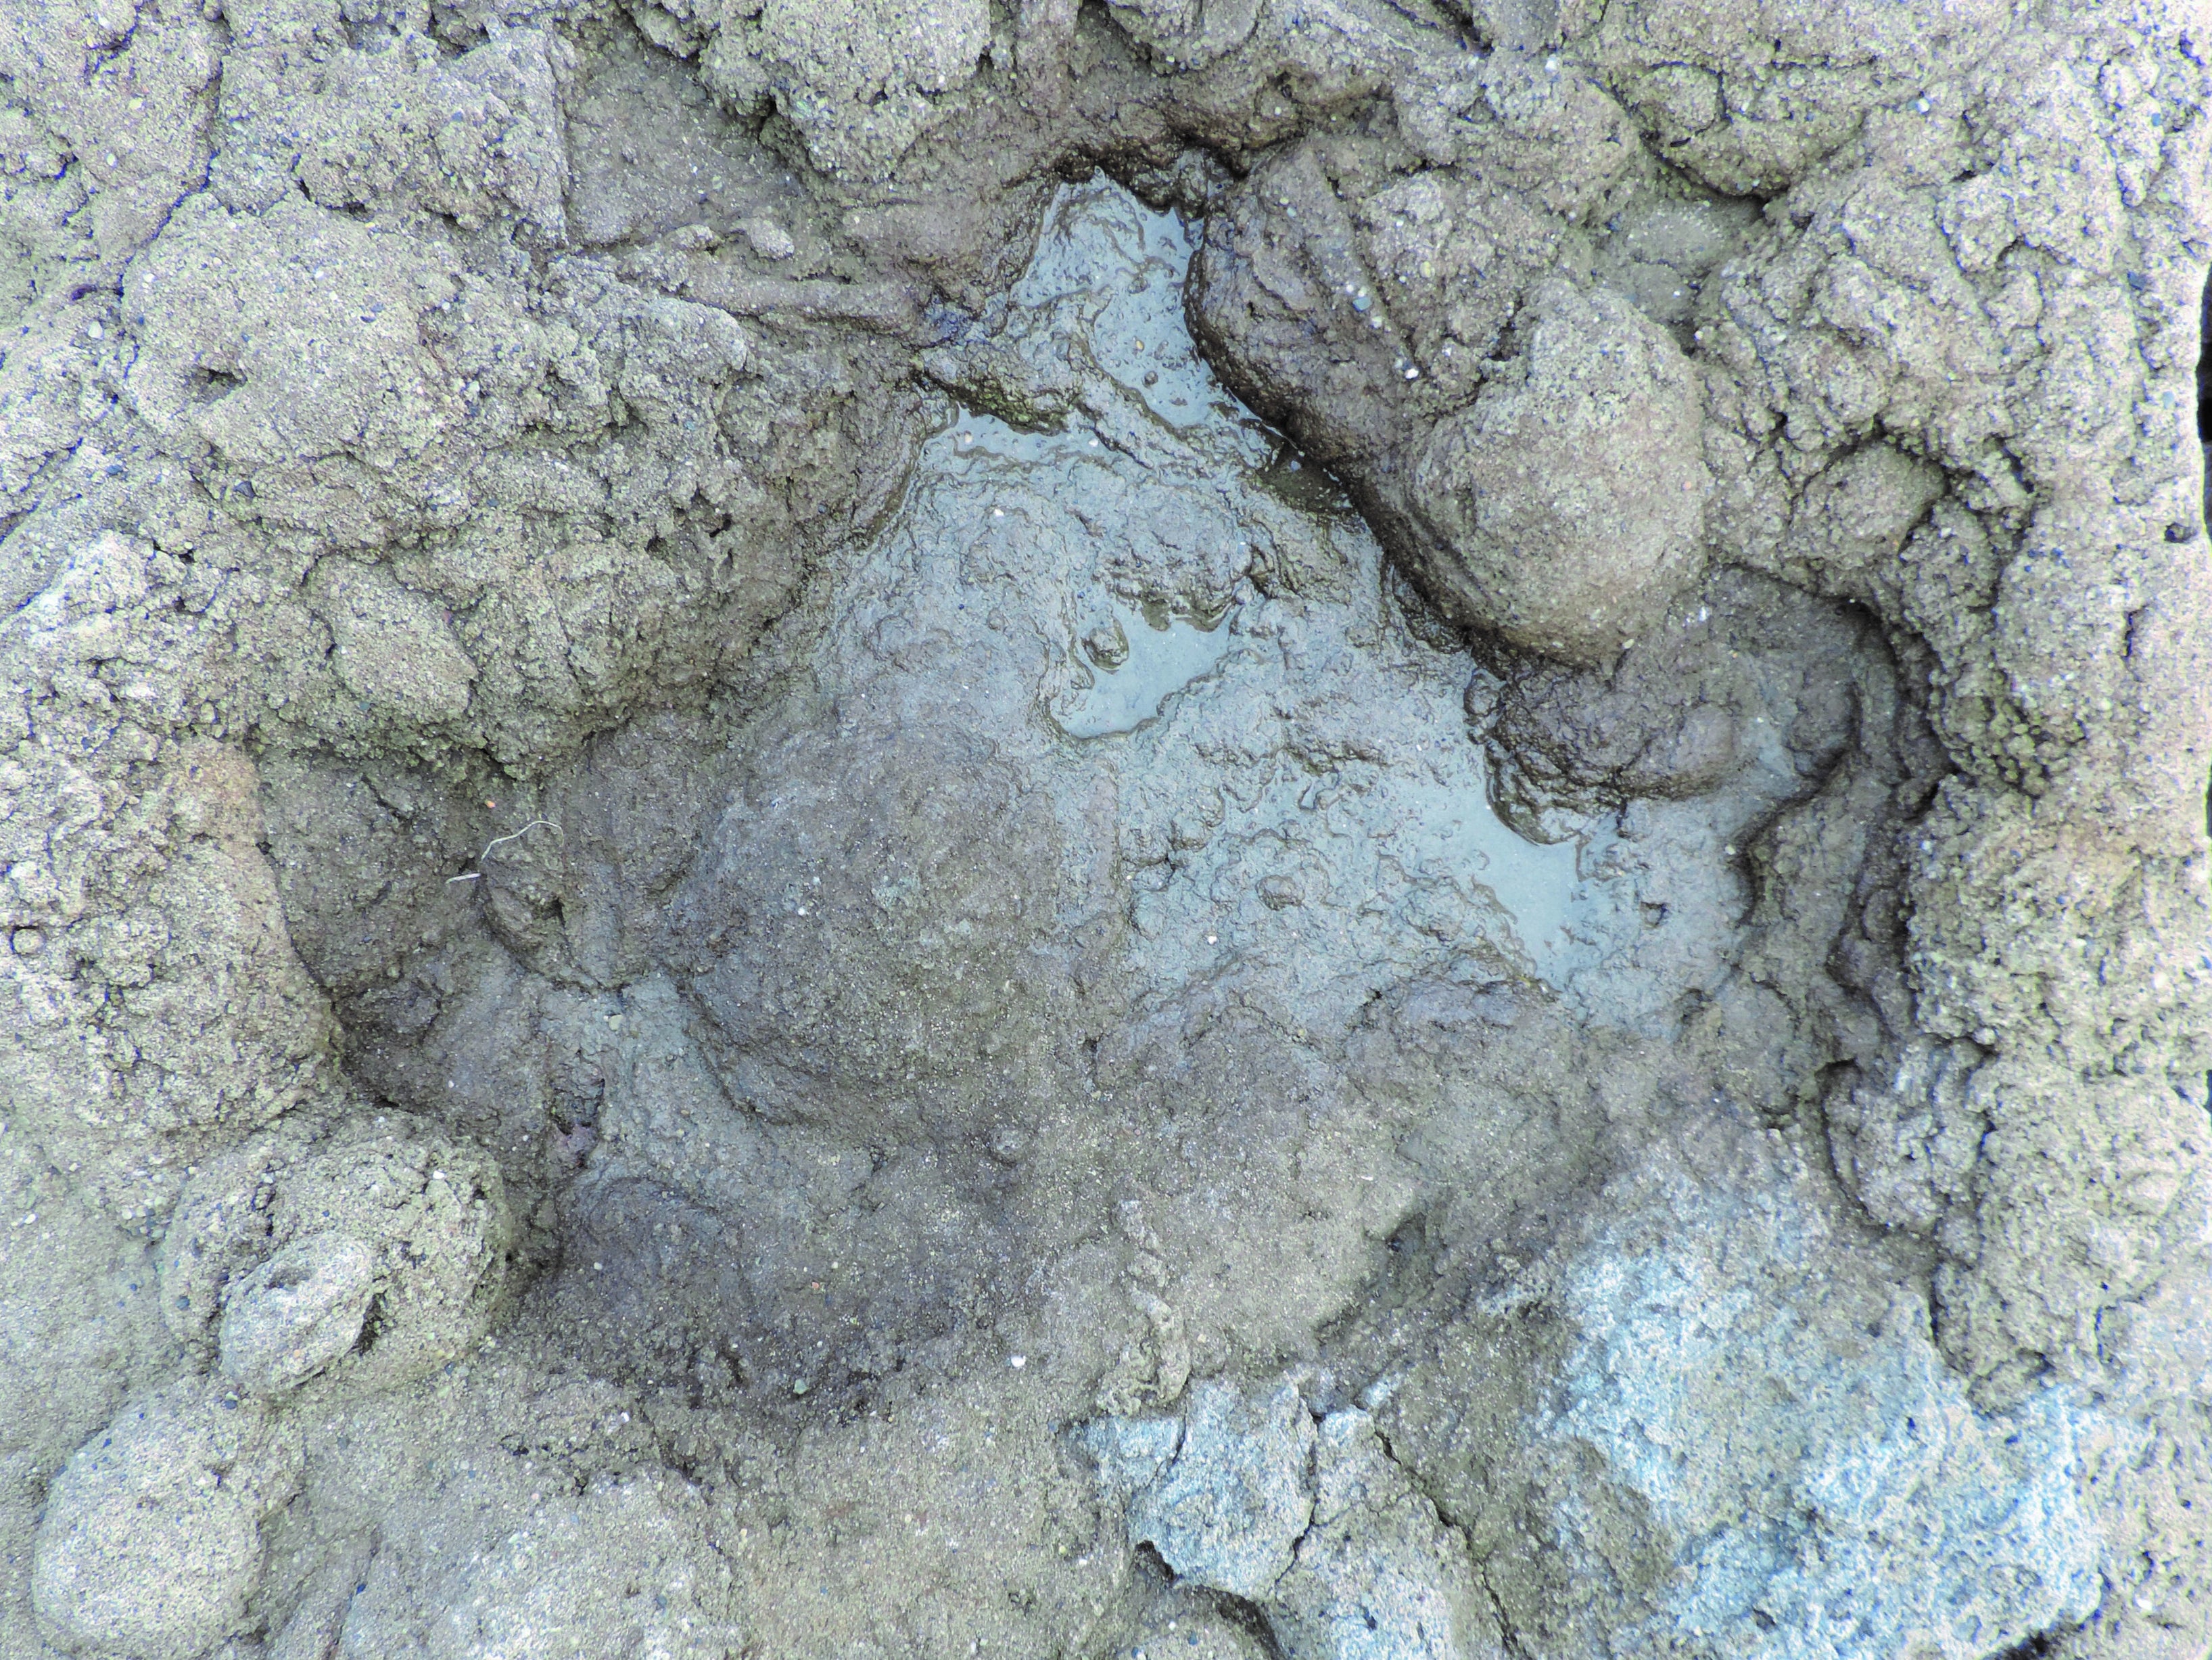 A large ornithopod footprint found in the rocks near Folkestone, Kent